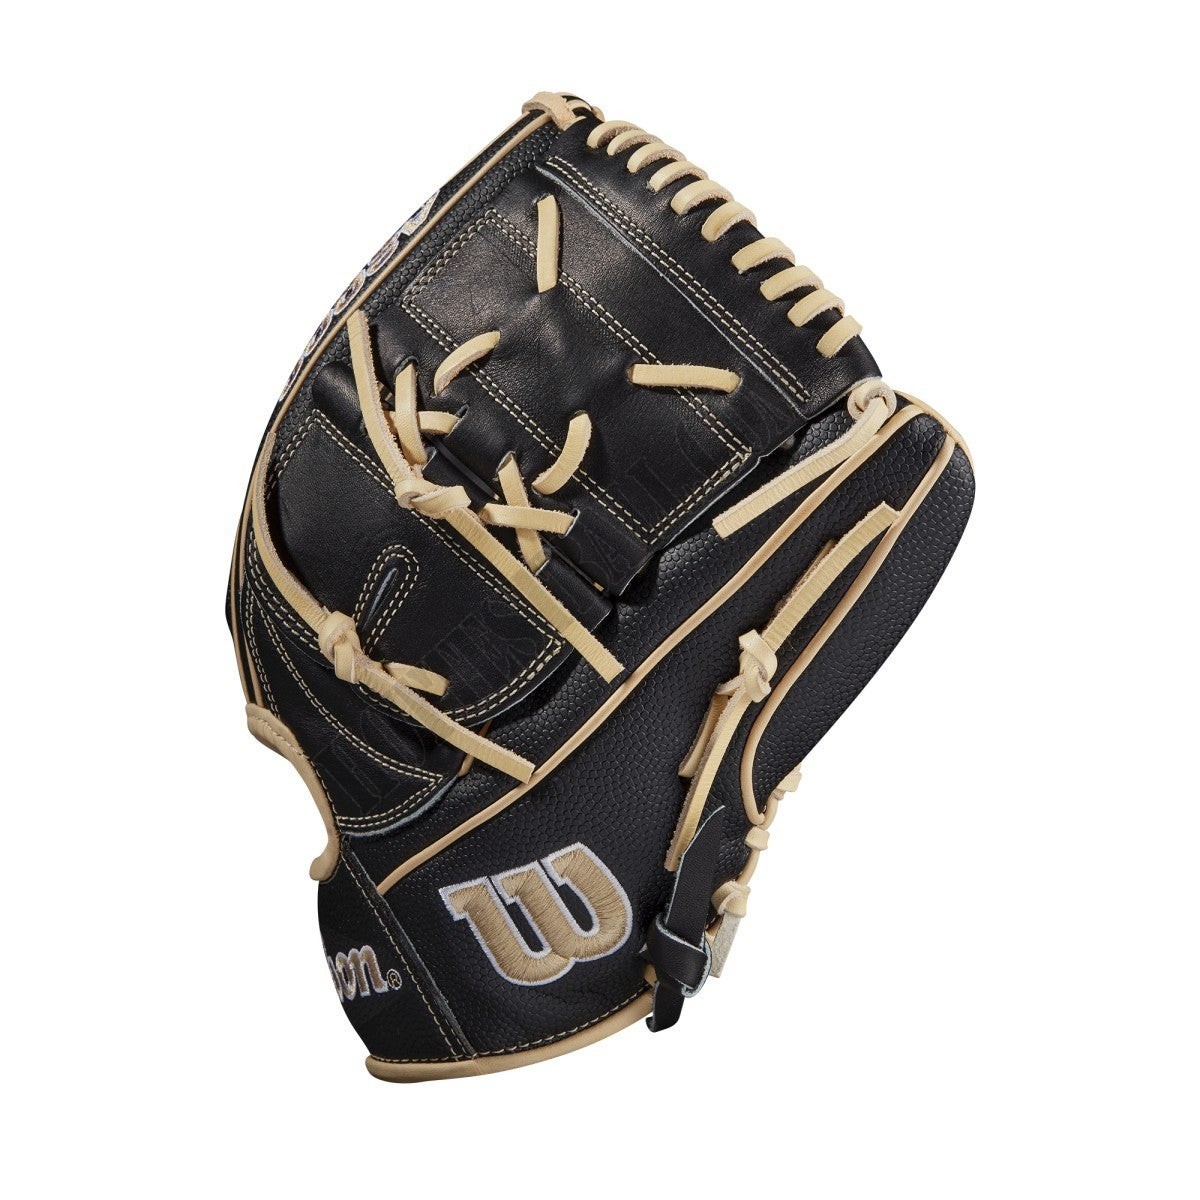 2021 A2000 B2SS 12" Pitcher's Baseball Glove ● Wilson Promotions - -3